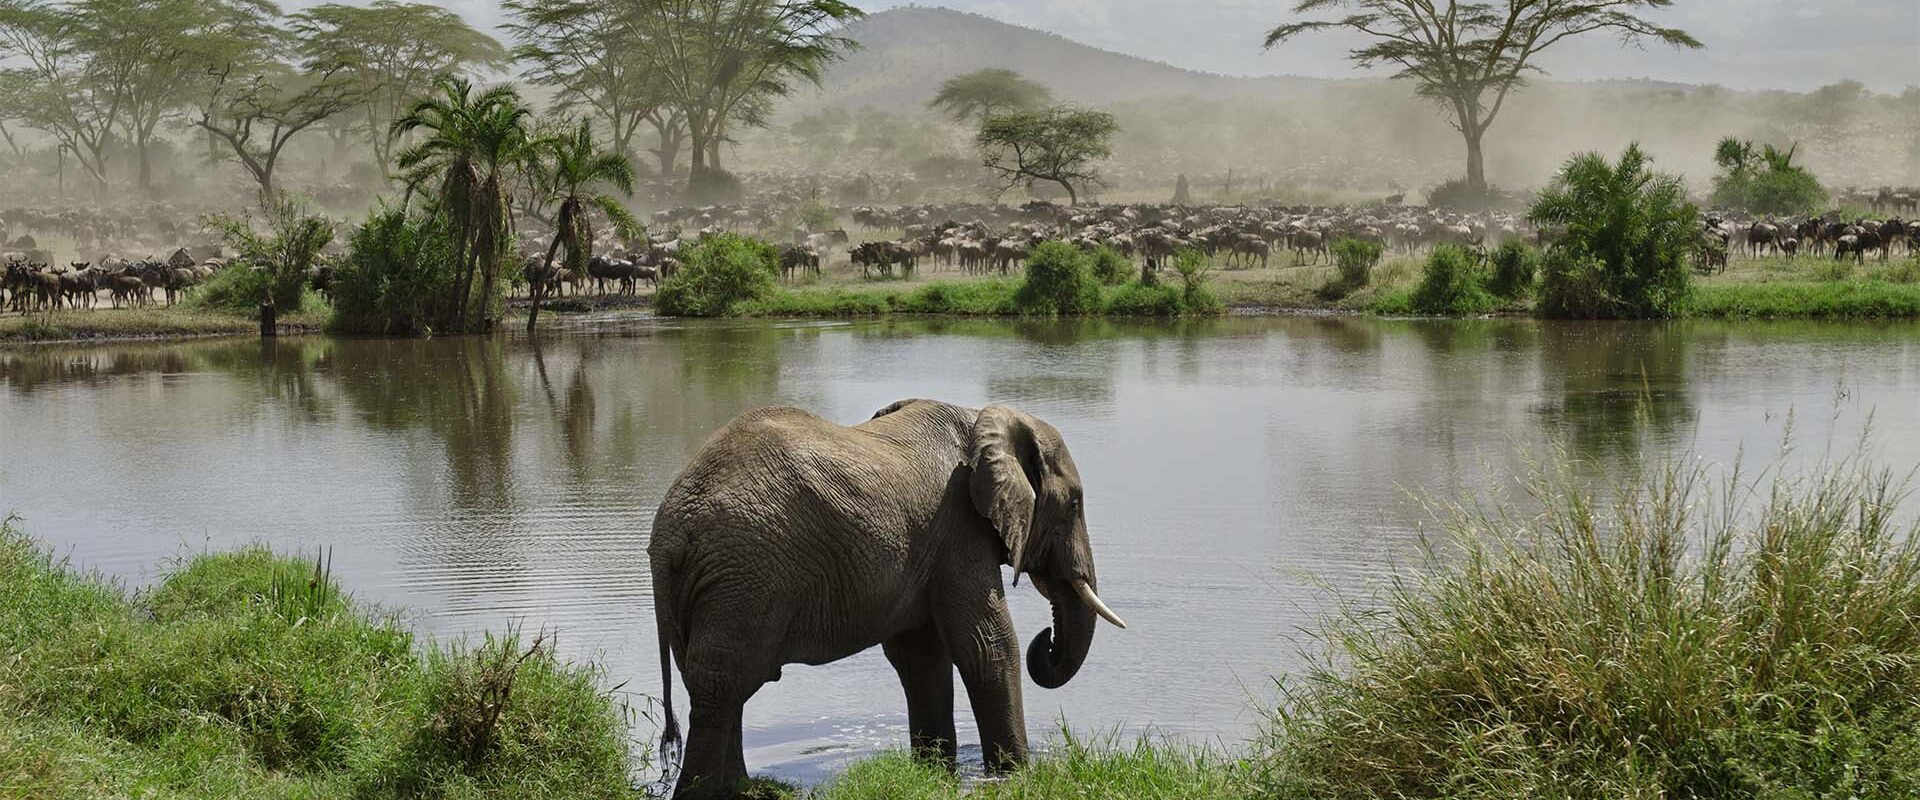 Tanzania elephant by water